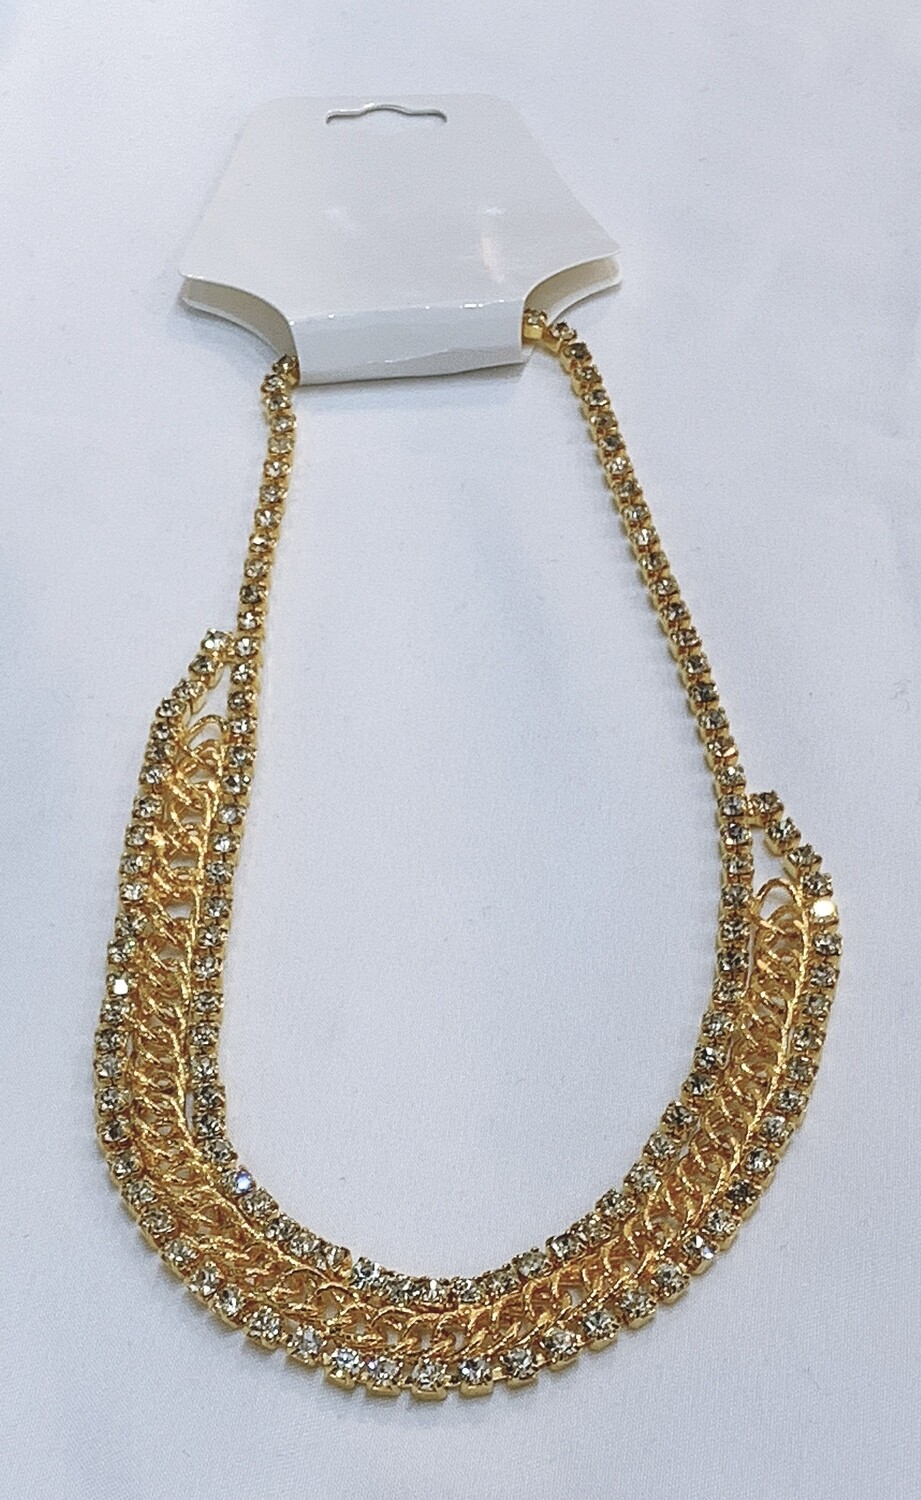 Gold and Rhinestone Choker 16” Necklace